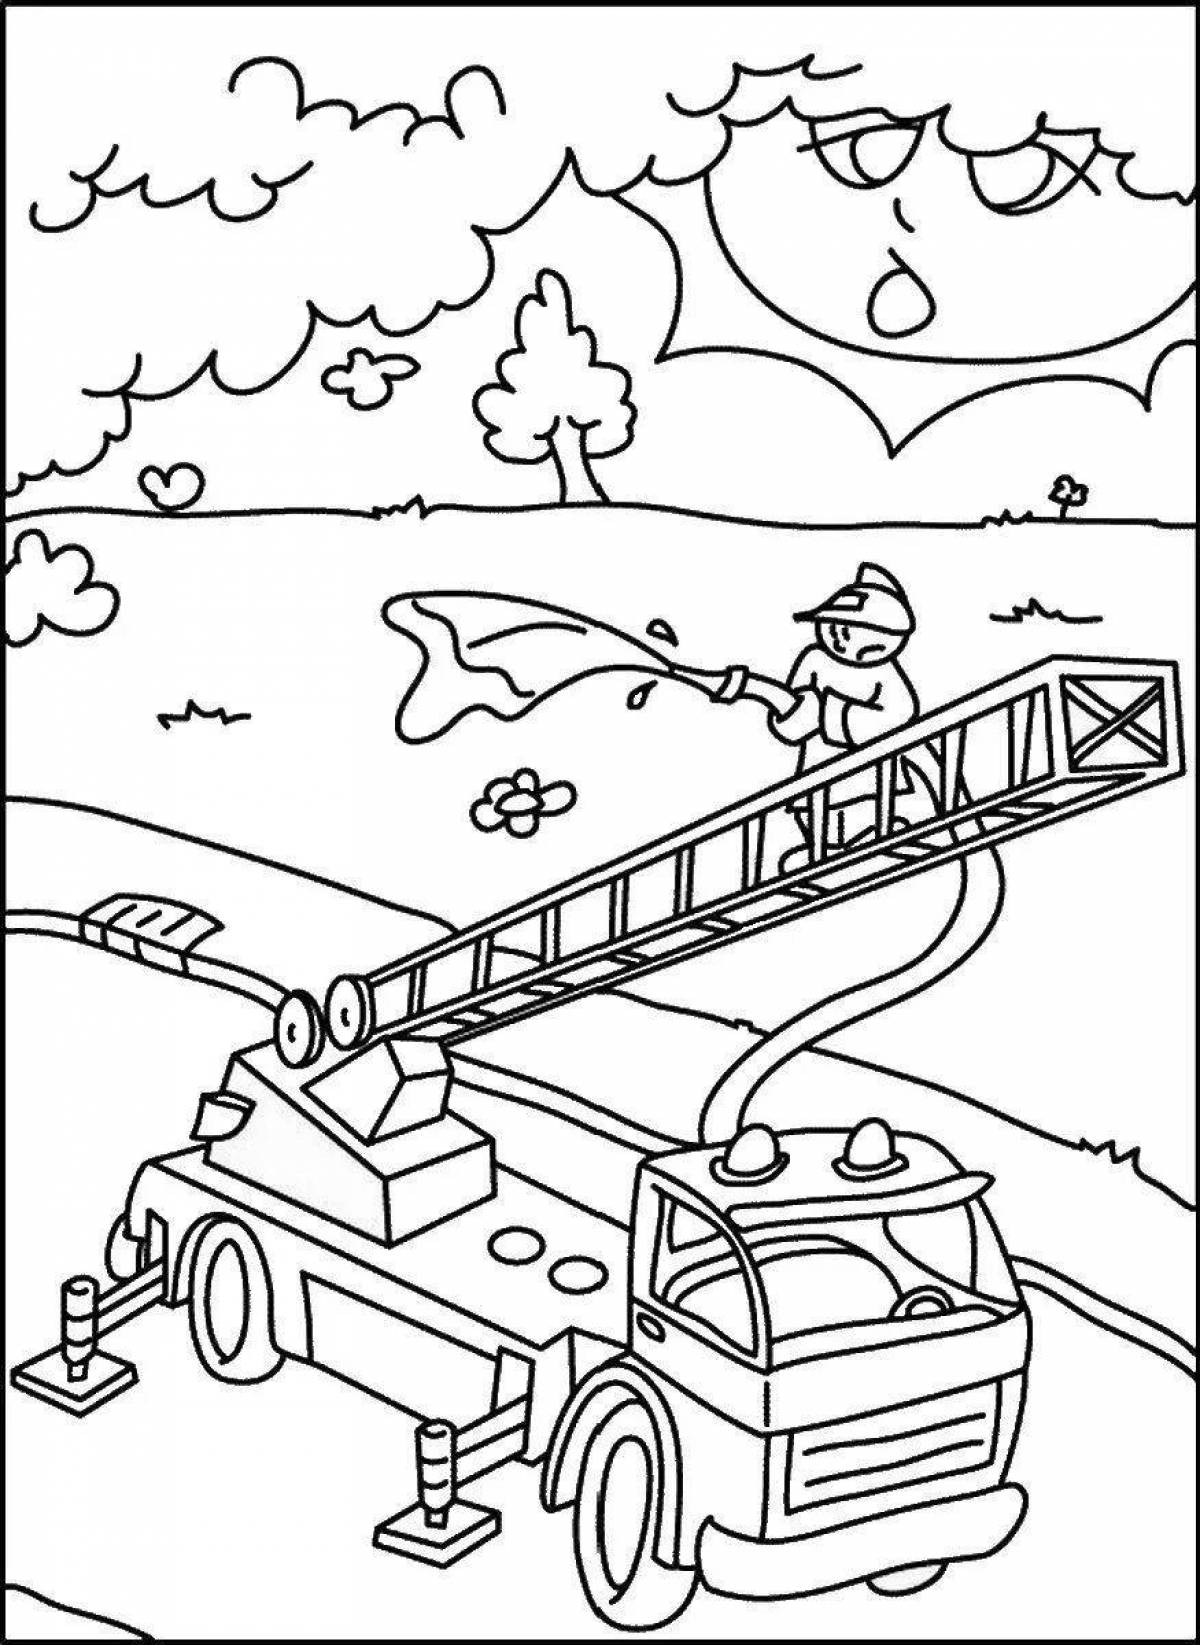 Fantastic firefighter coloring book for kids